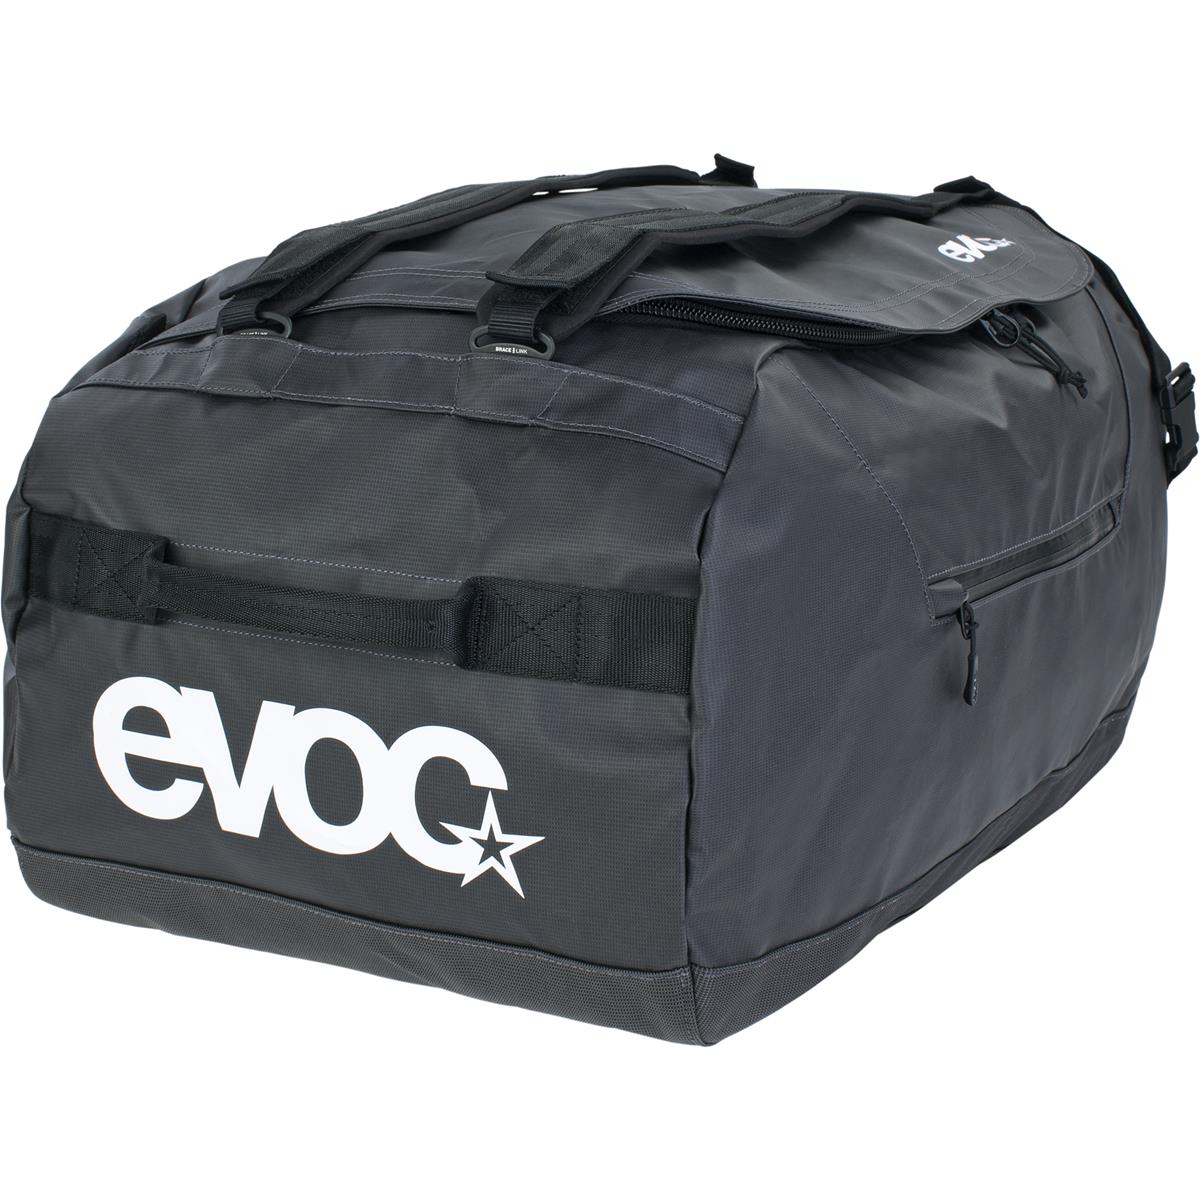 Evoc Reisetasche Duffle Bag 60 Carbon Grau/Schwarz